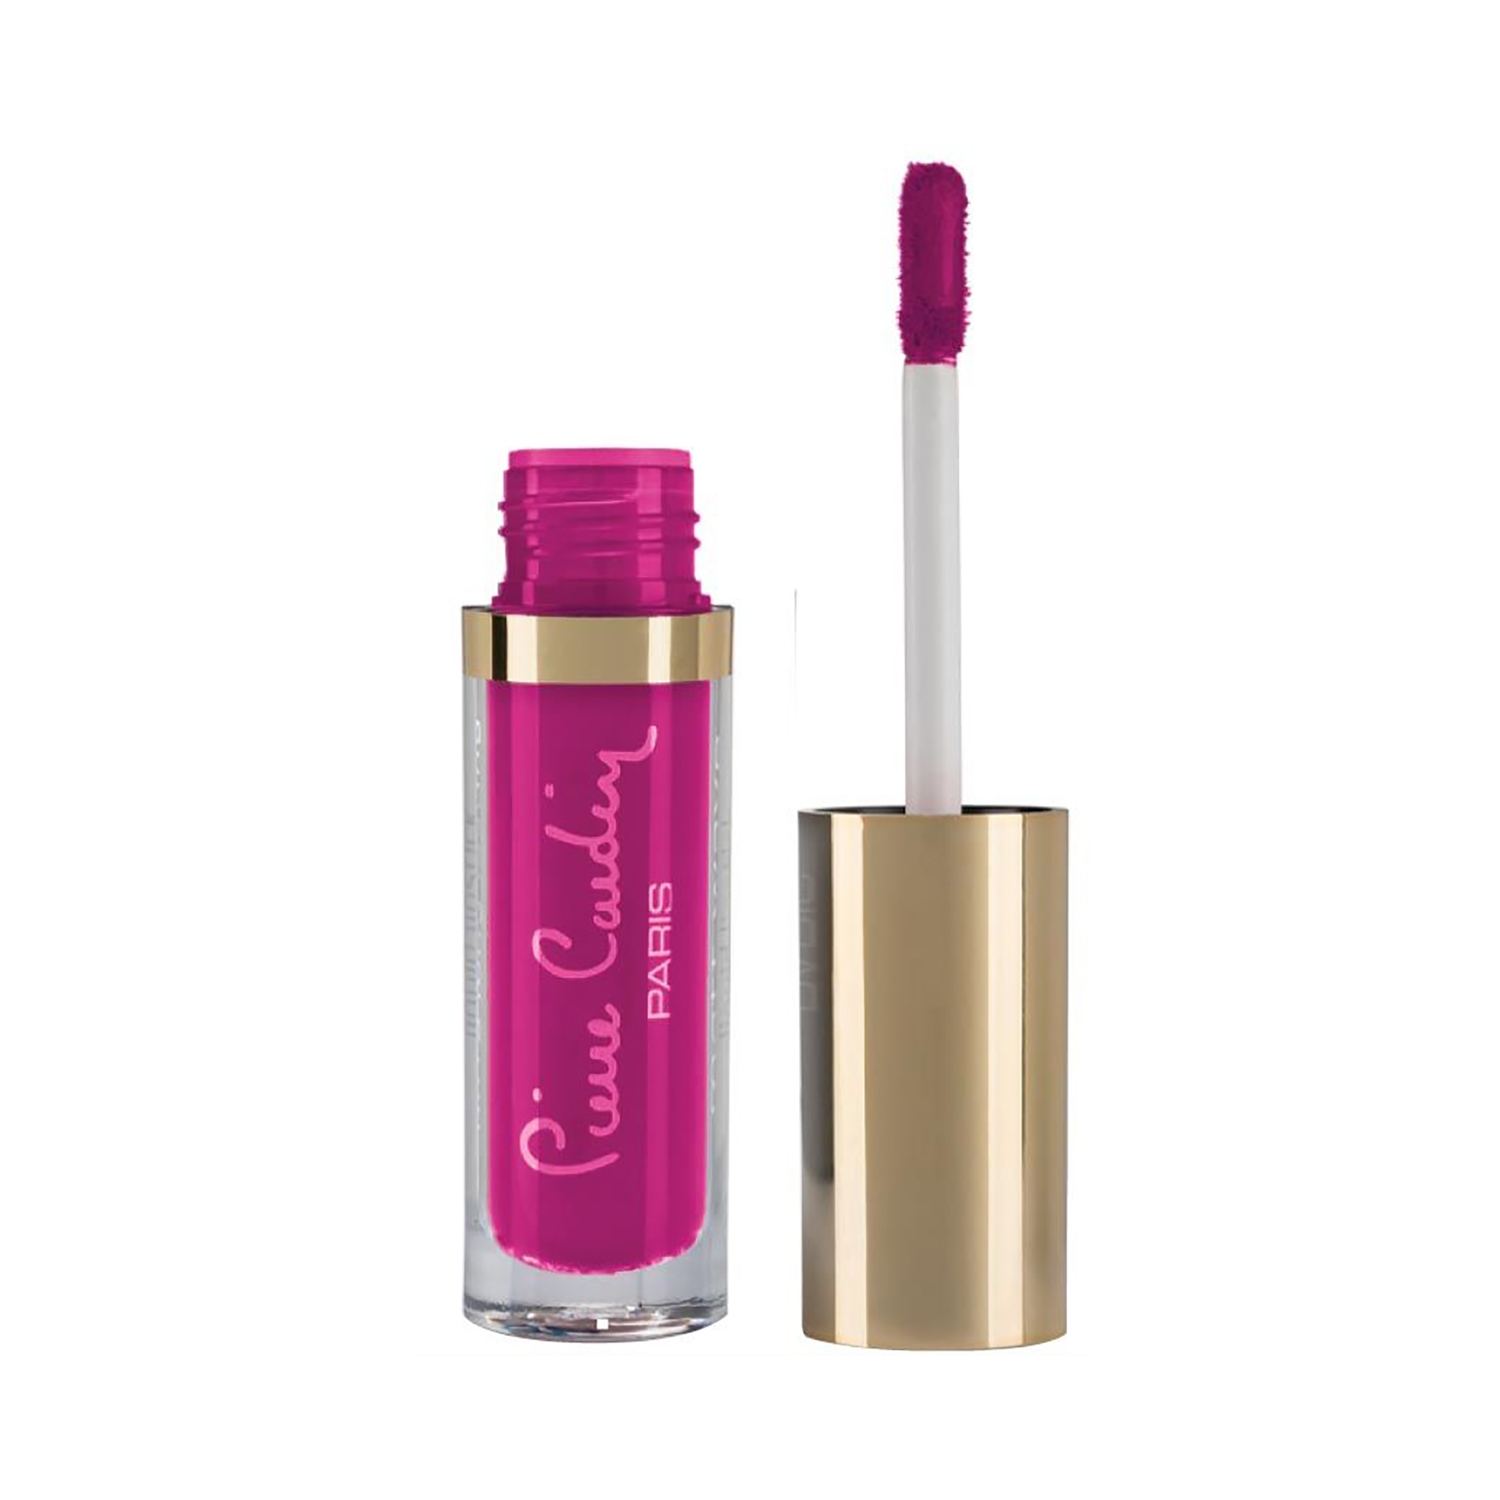 Pierre Cardin Paris | Pierre Cardin Paris Matt Wave Liquid Lipstick - 525 Deep Pink (5ml)